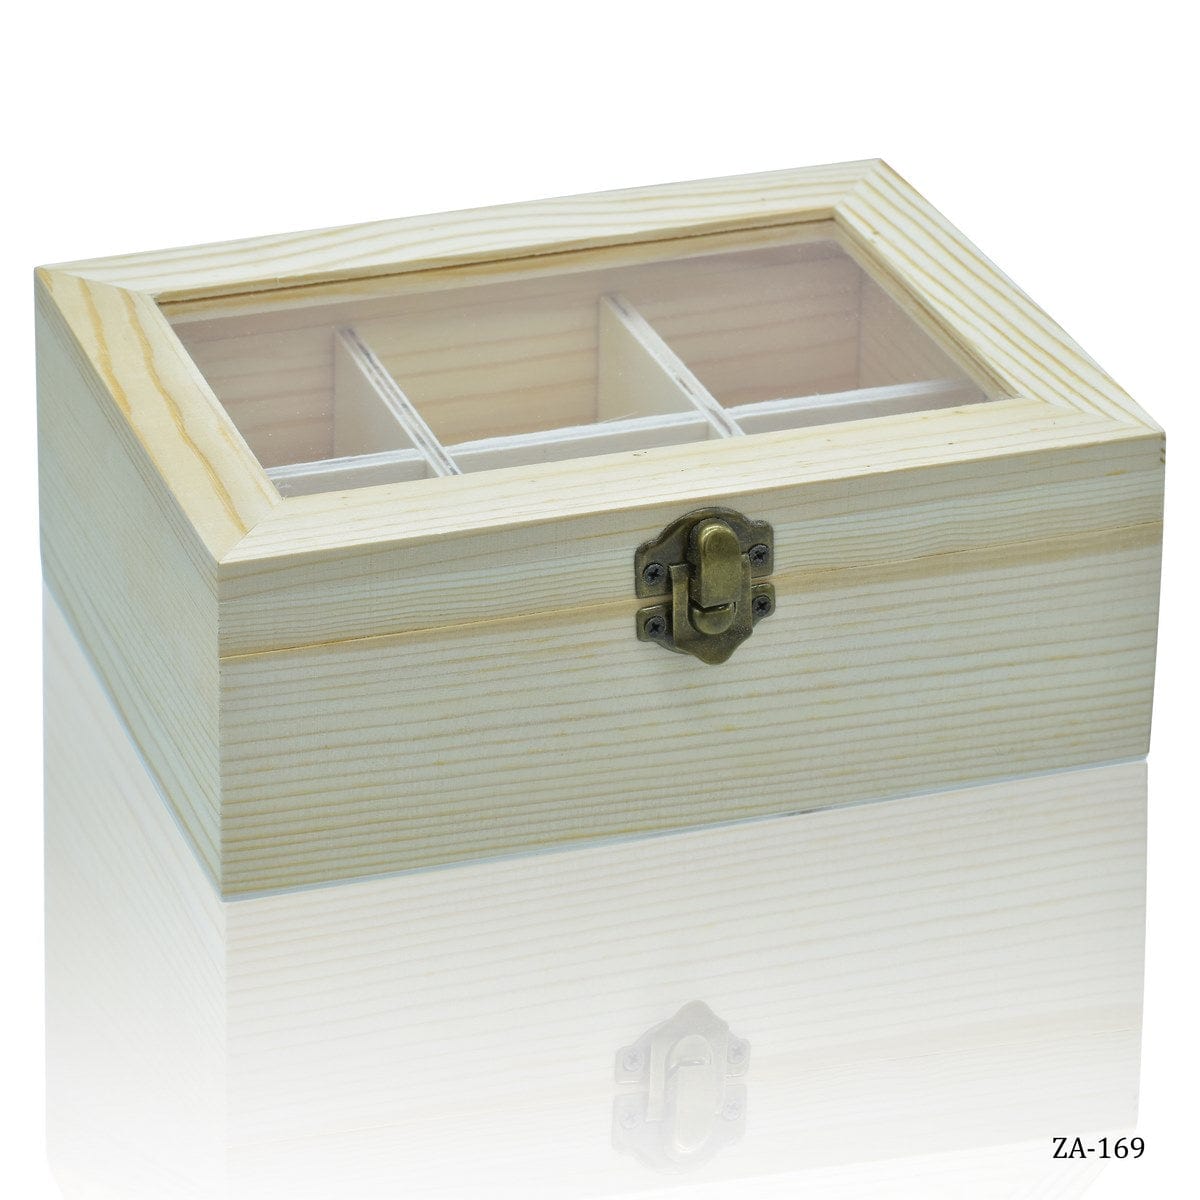 jags-mumbai Wooden box Small Empty Wooden Box With Window Rectangle